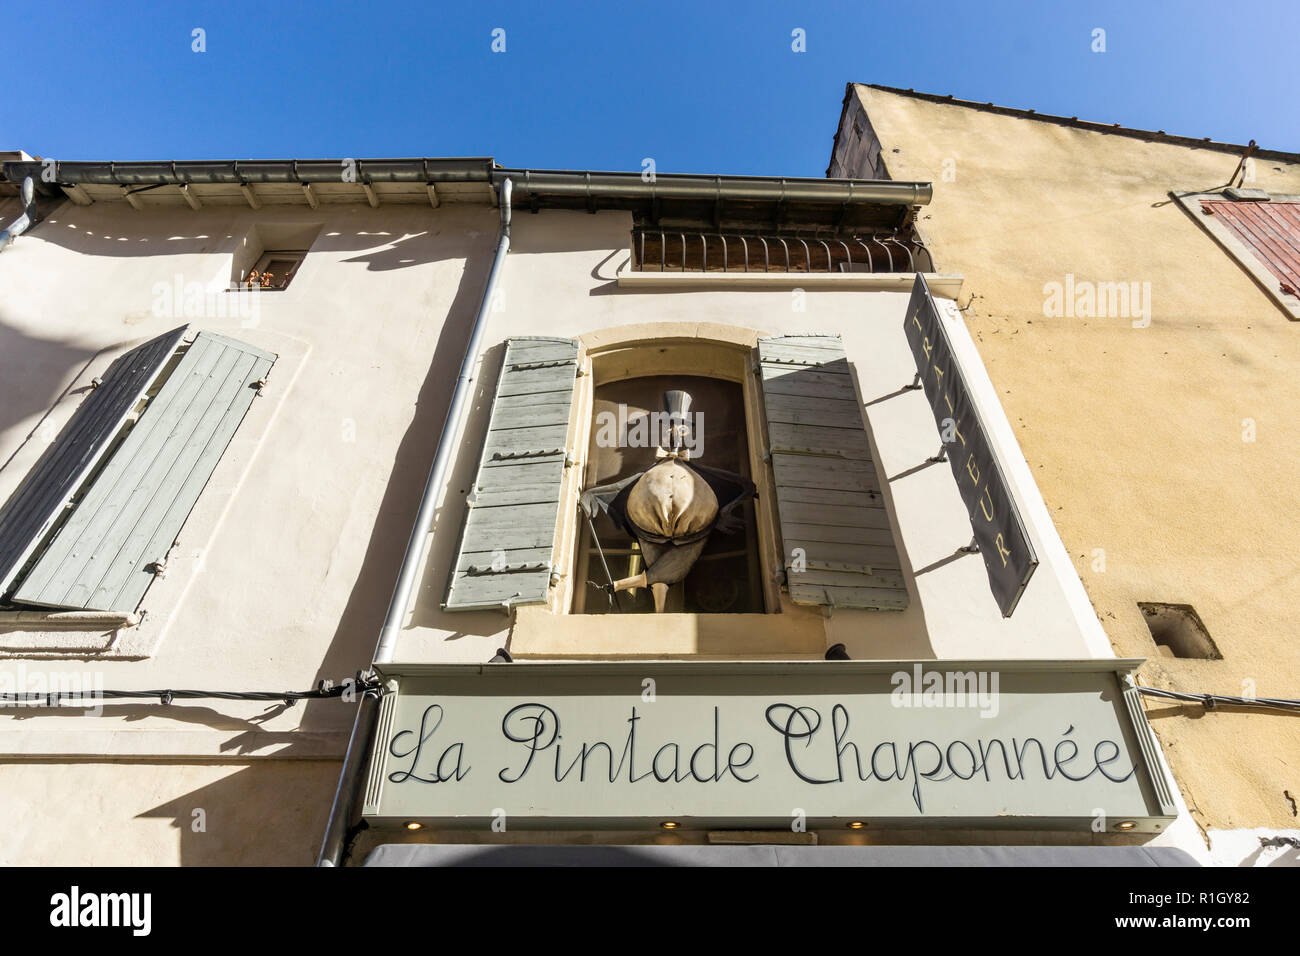 La Pintade Chaponnee, Gourmet Deli Shop, take away, Fassade mit lustigen Stockfoto